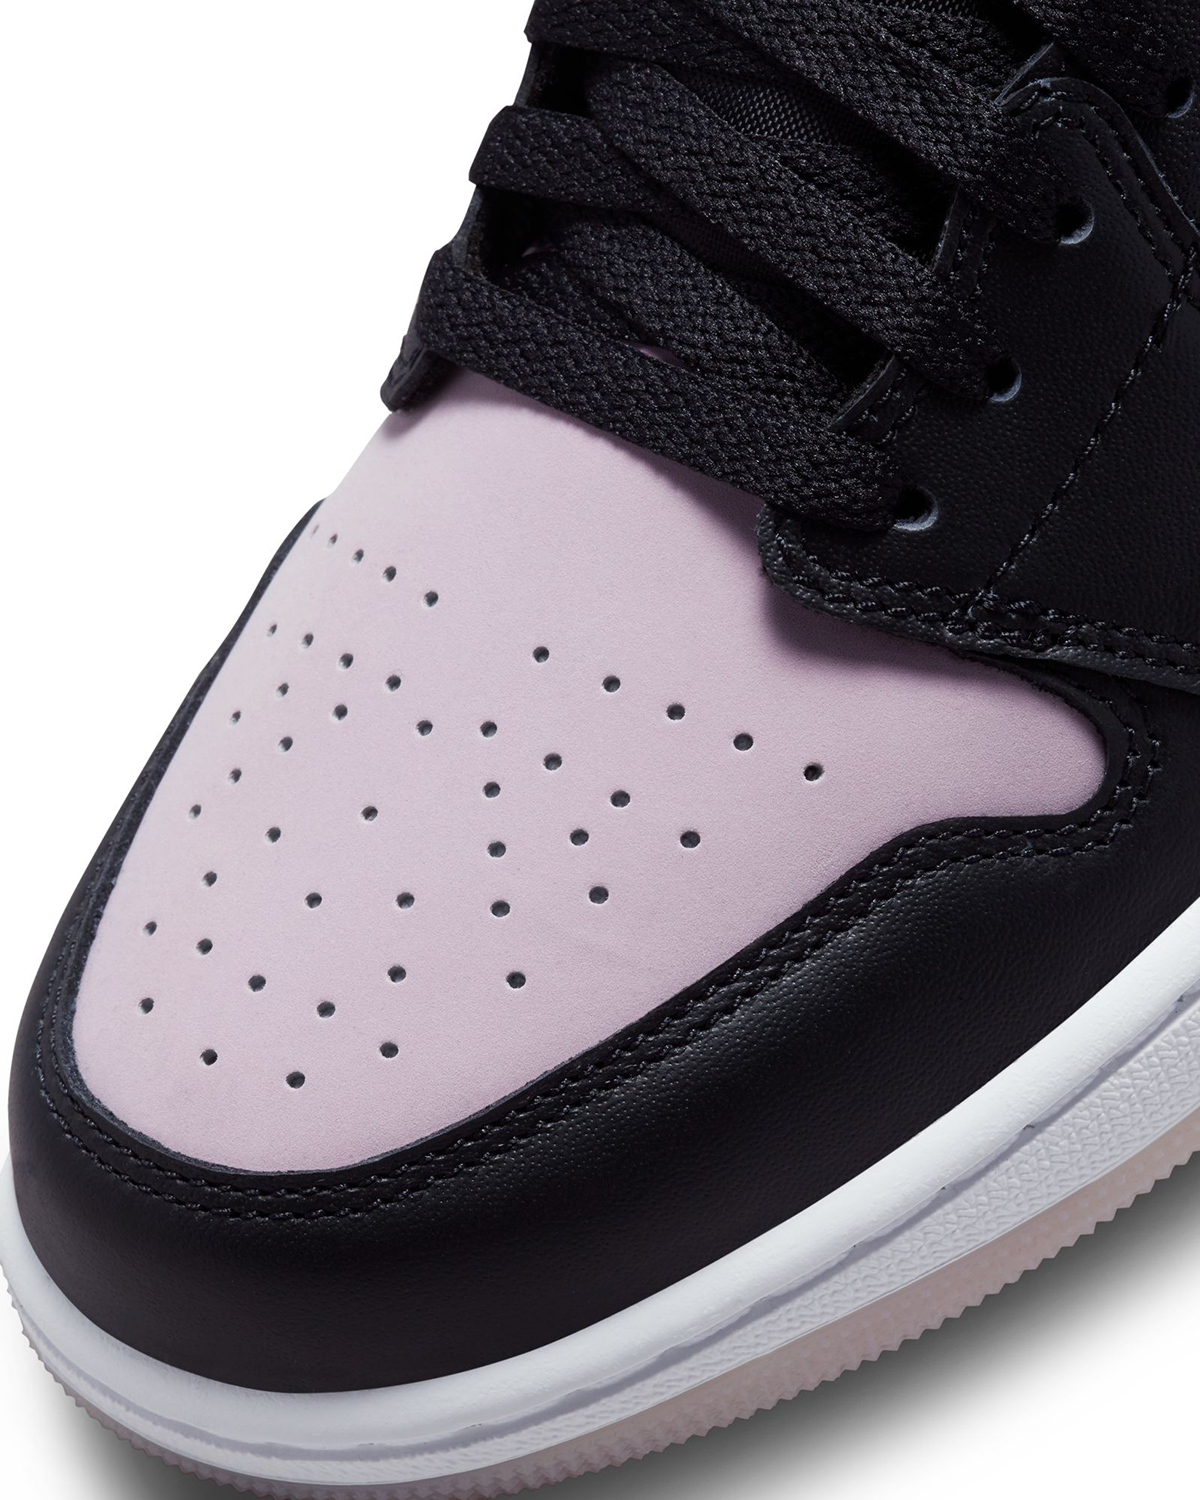 Air Jordan 1 Low Black/Iced Lilac